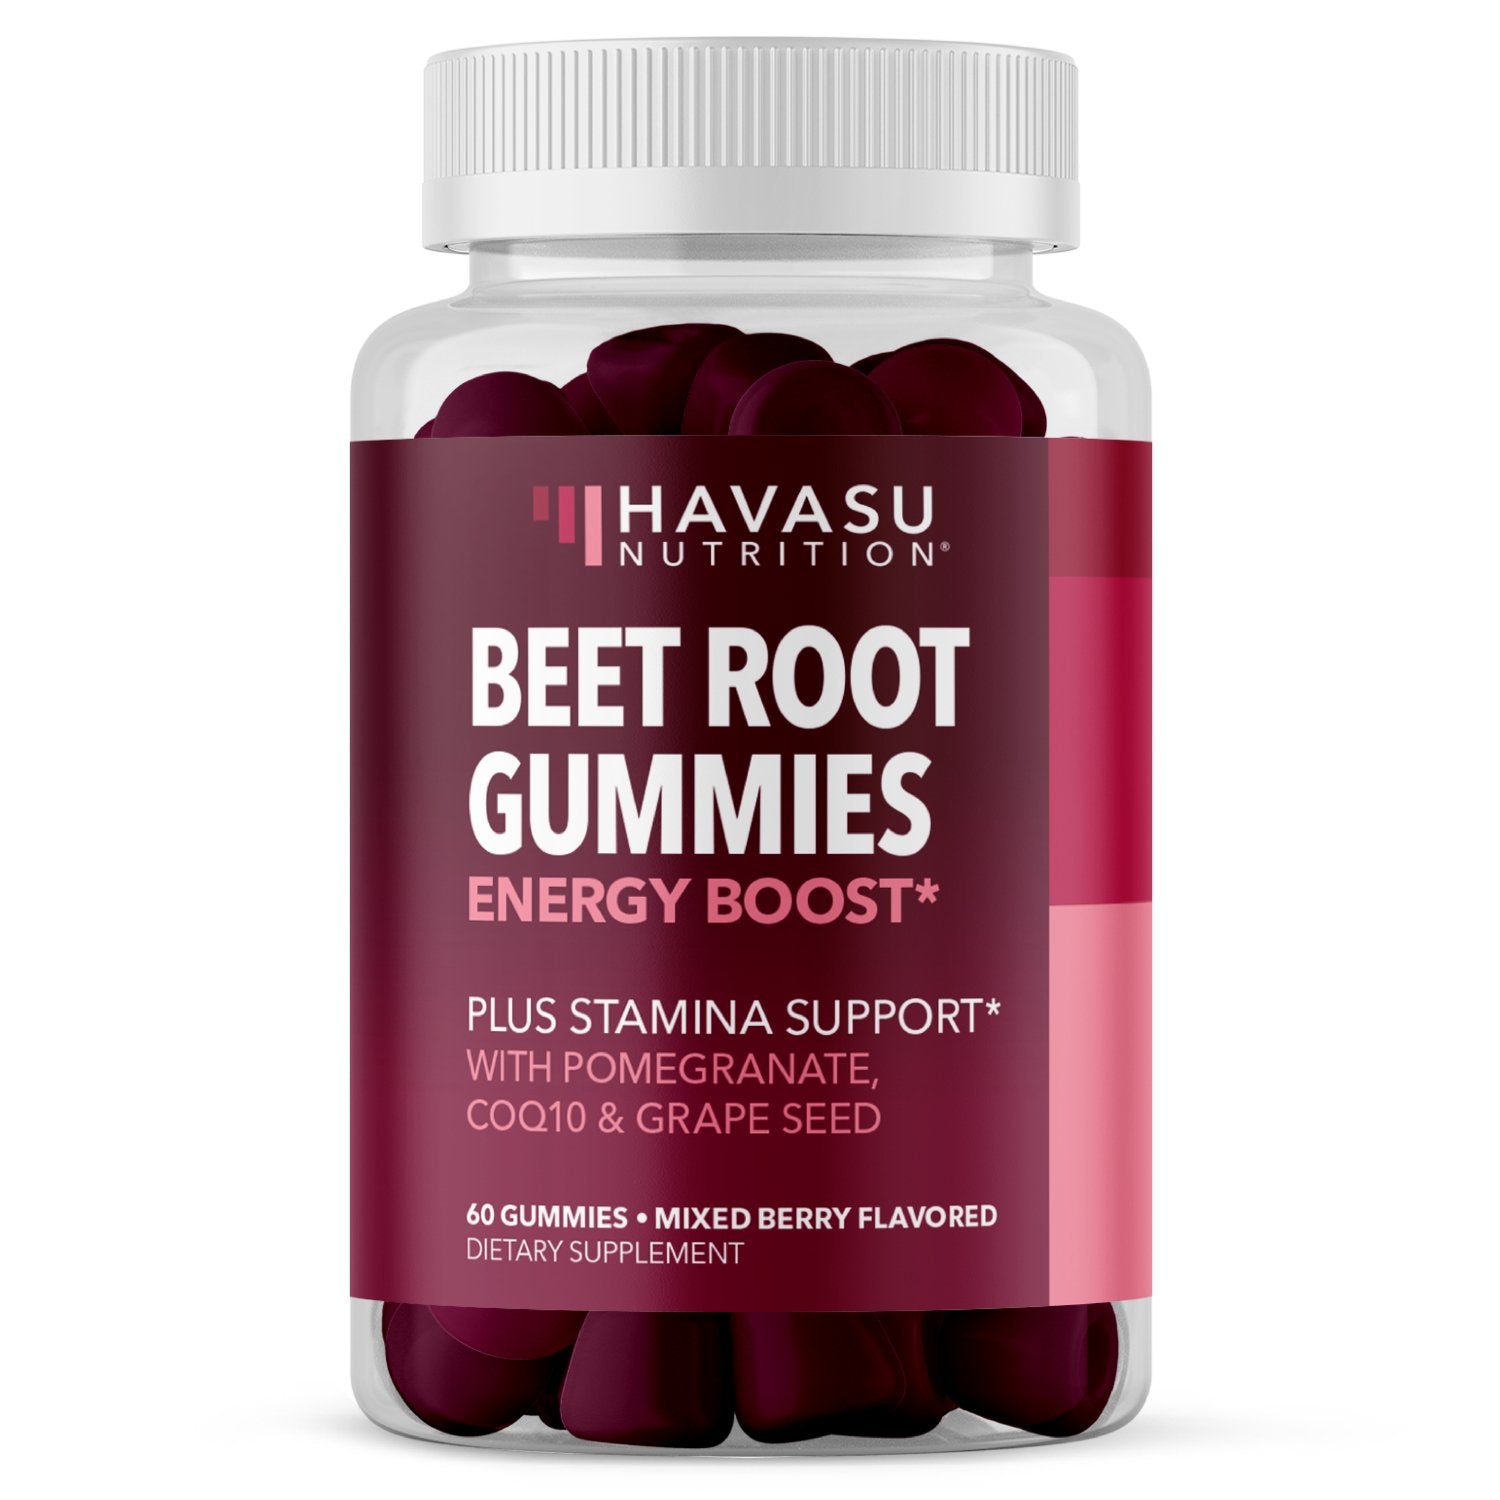 Beet Root Gummies - Havasu Nutrition